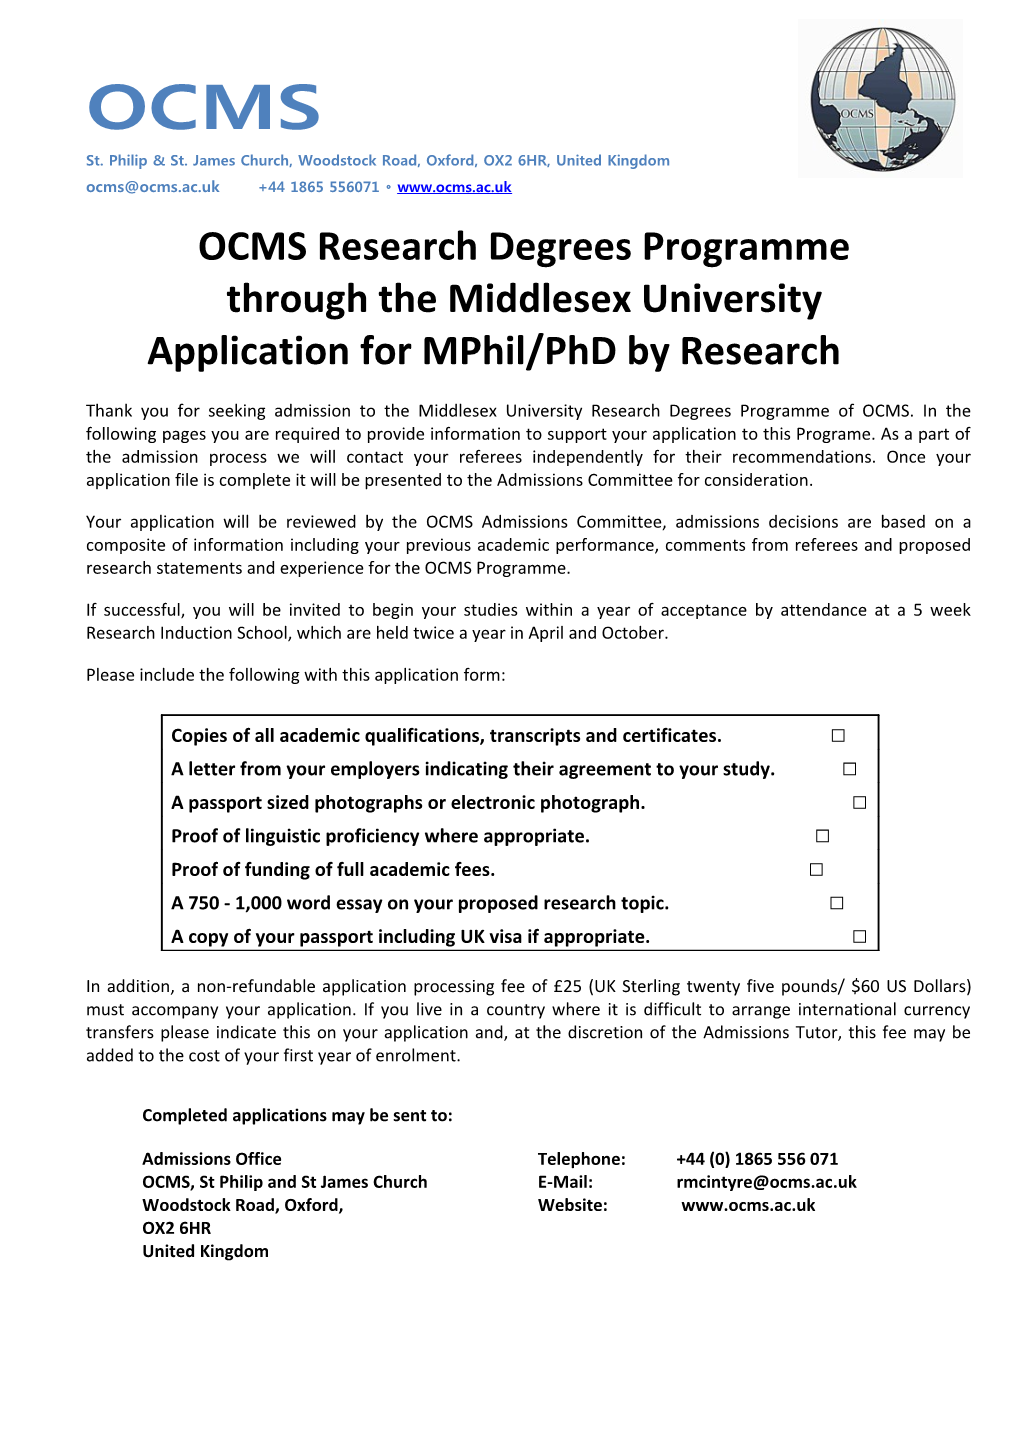 OCMS Research Degrees Programme